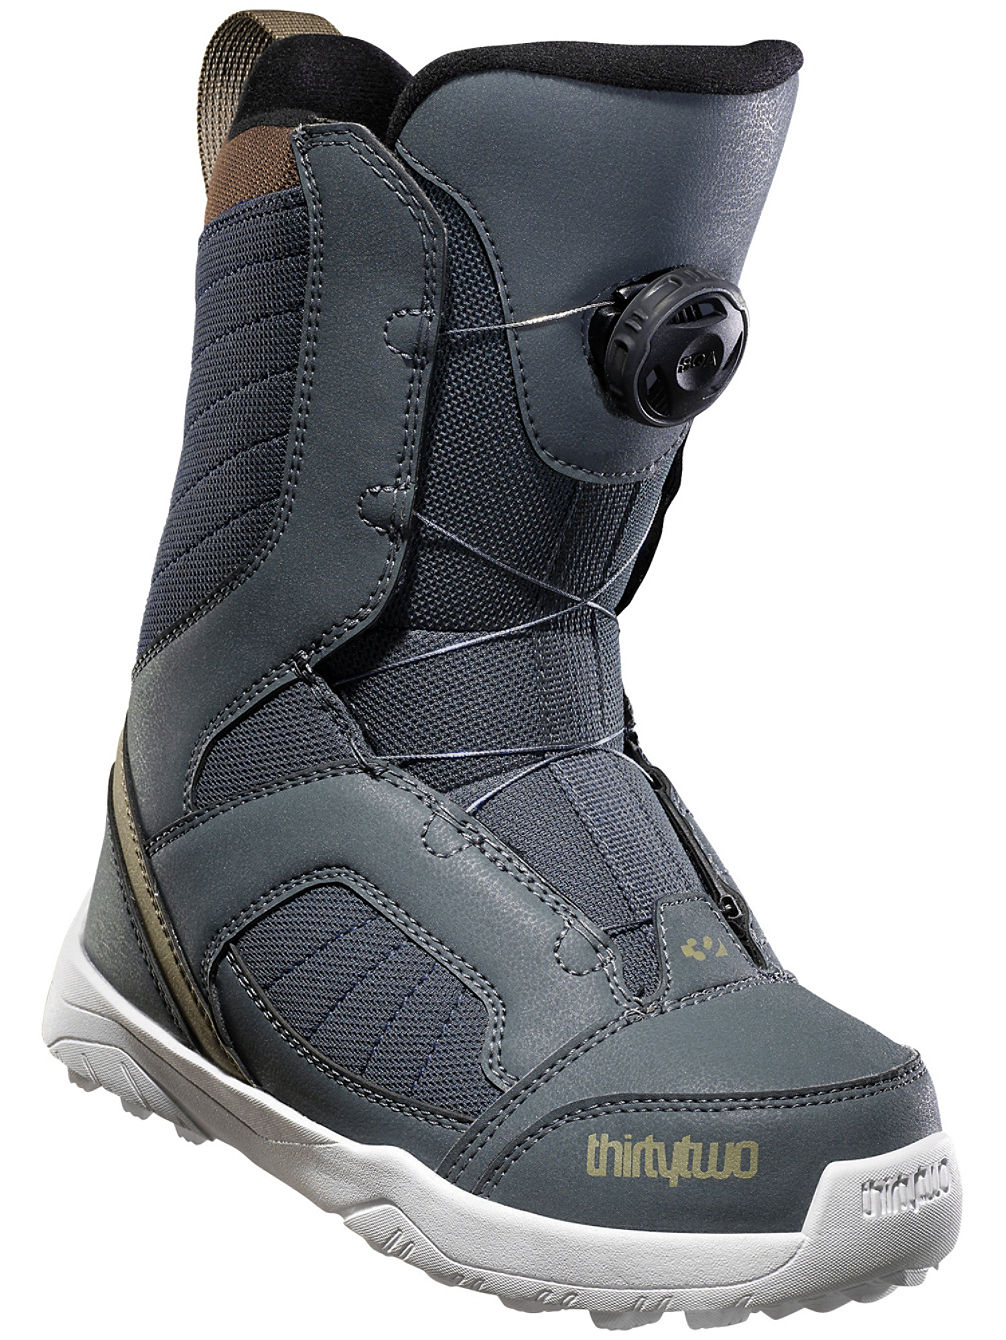 Boa Snowboard Boots